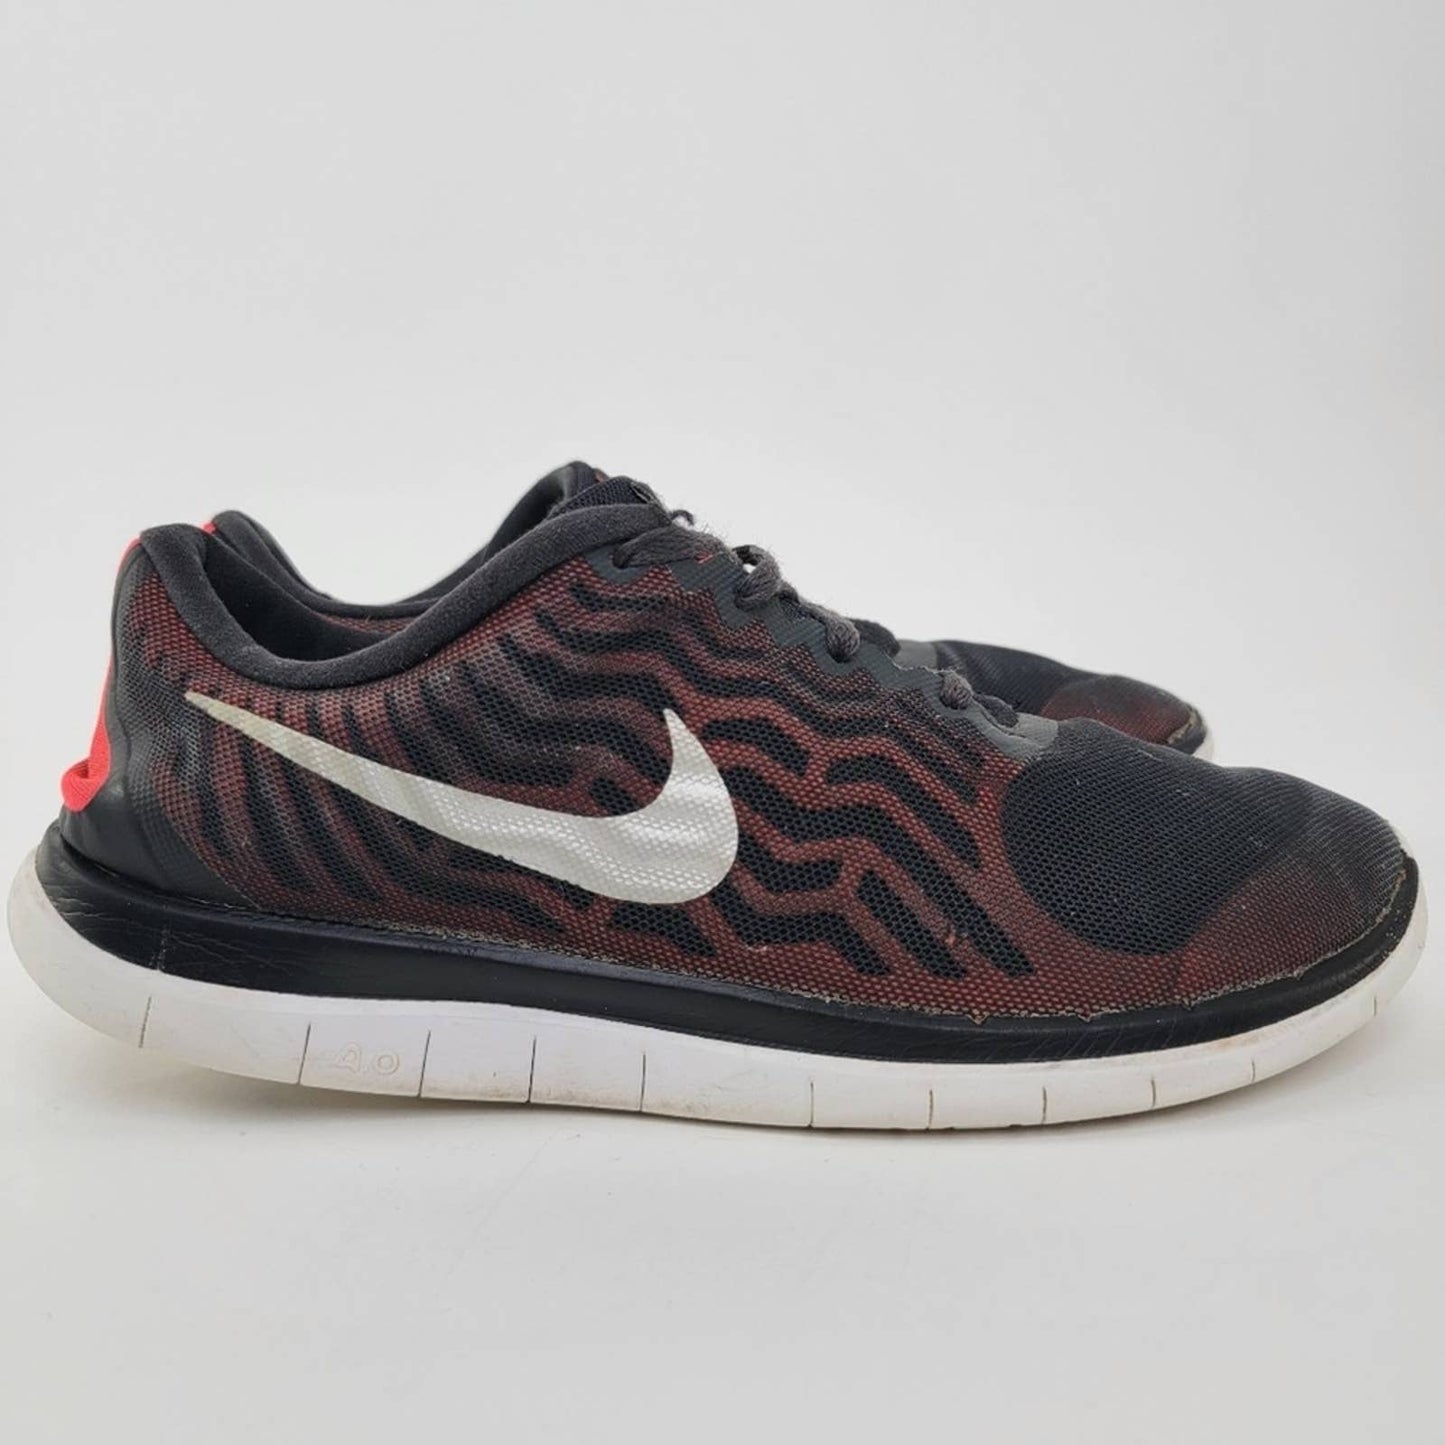 Nike Free 4.0 Running Shoes - 10